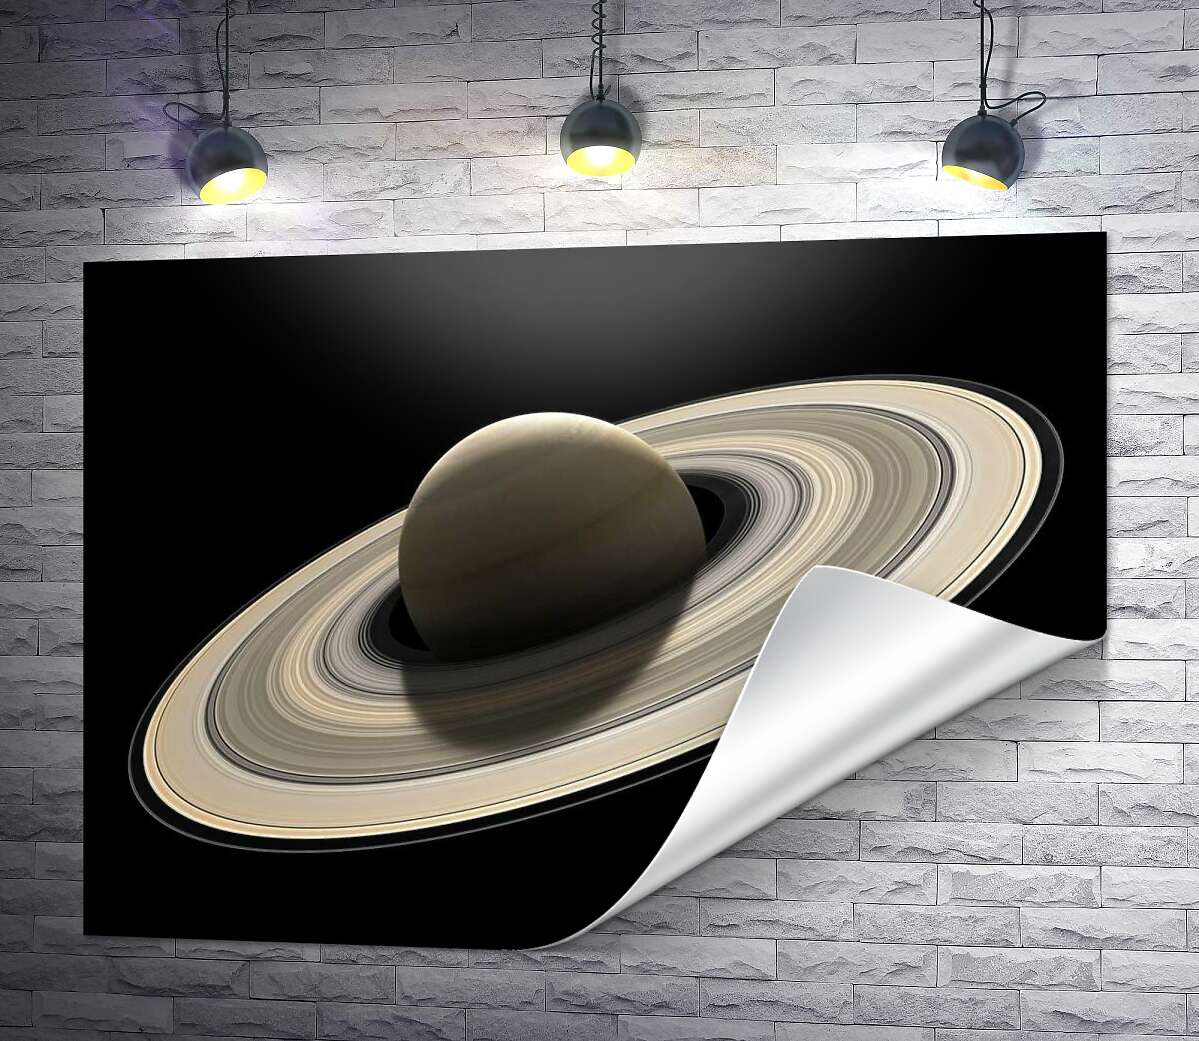 друк Сатурн у крижаних кільцях